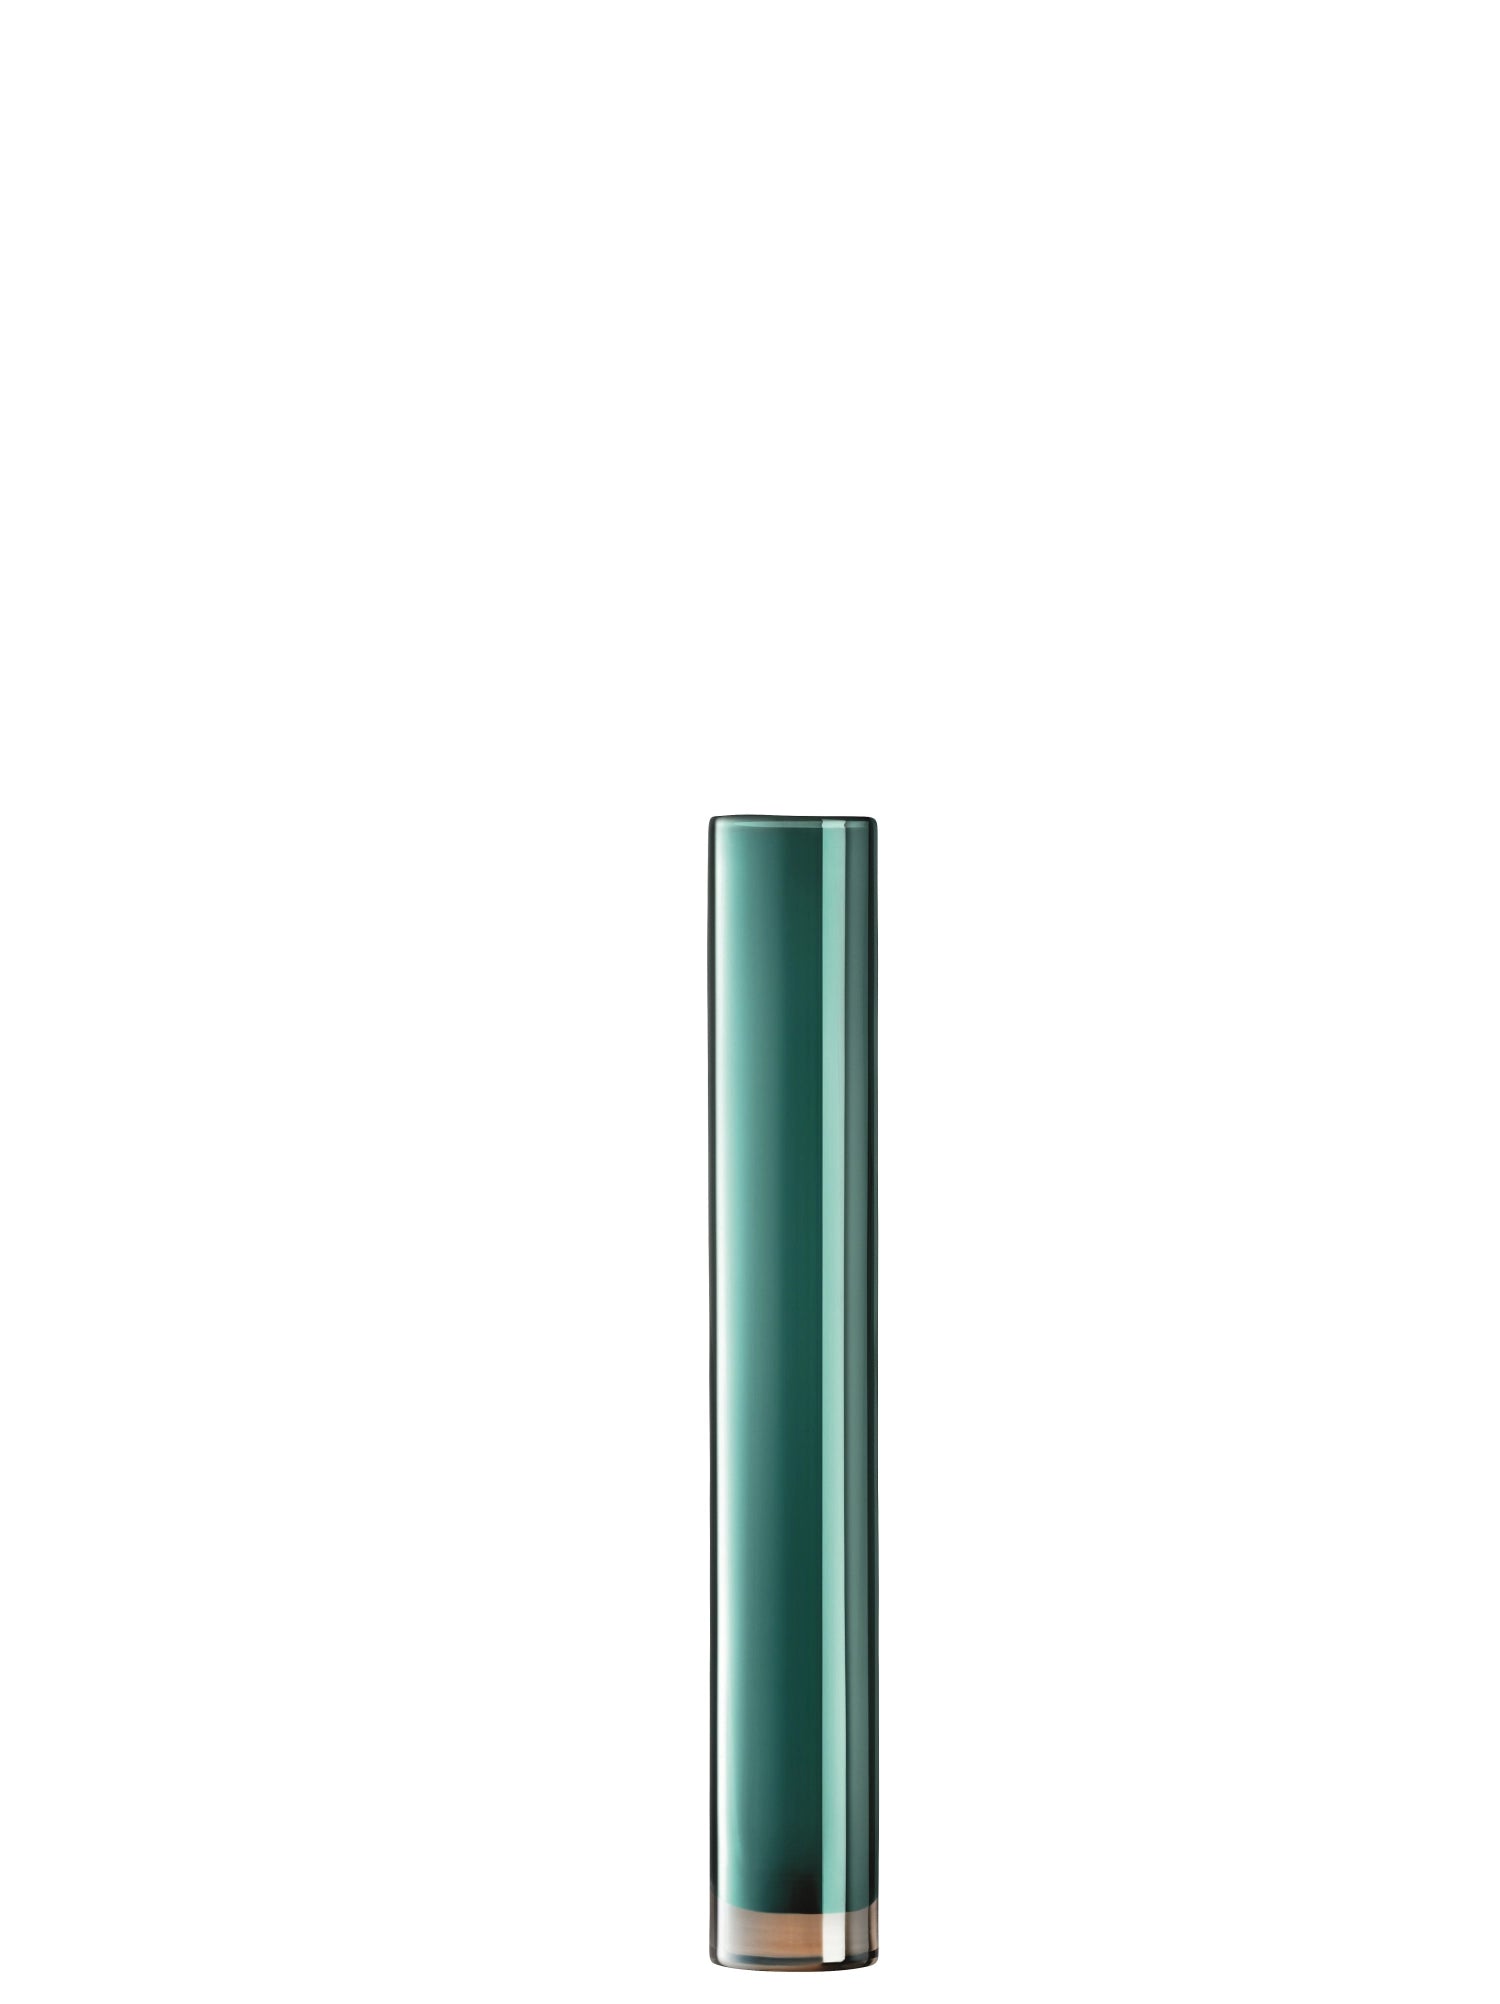 Epoque Vase H48cm Pfauenblau Lüster - KAQTU Design